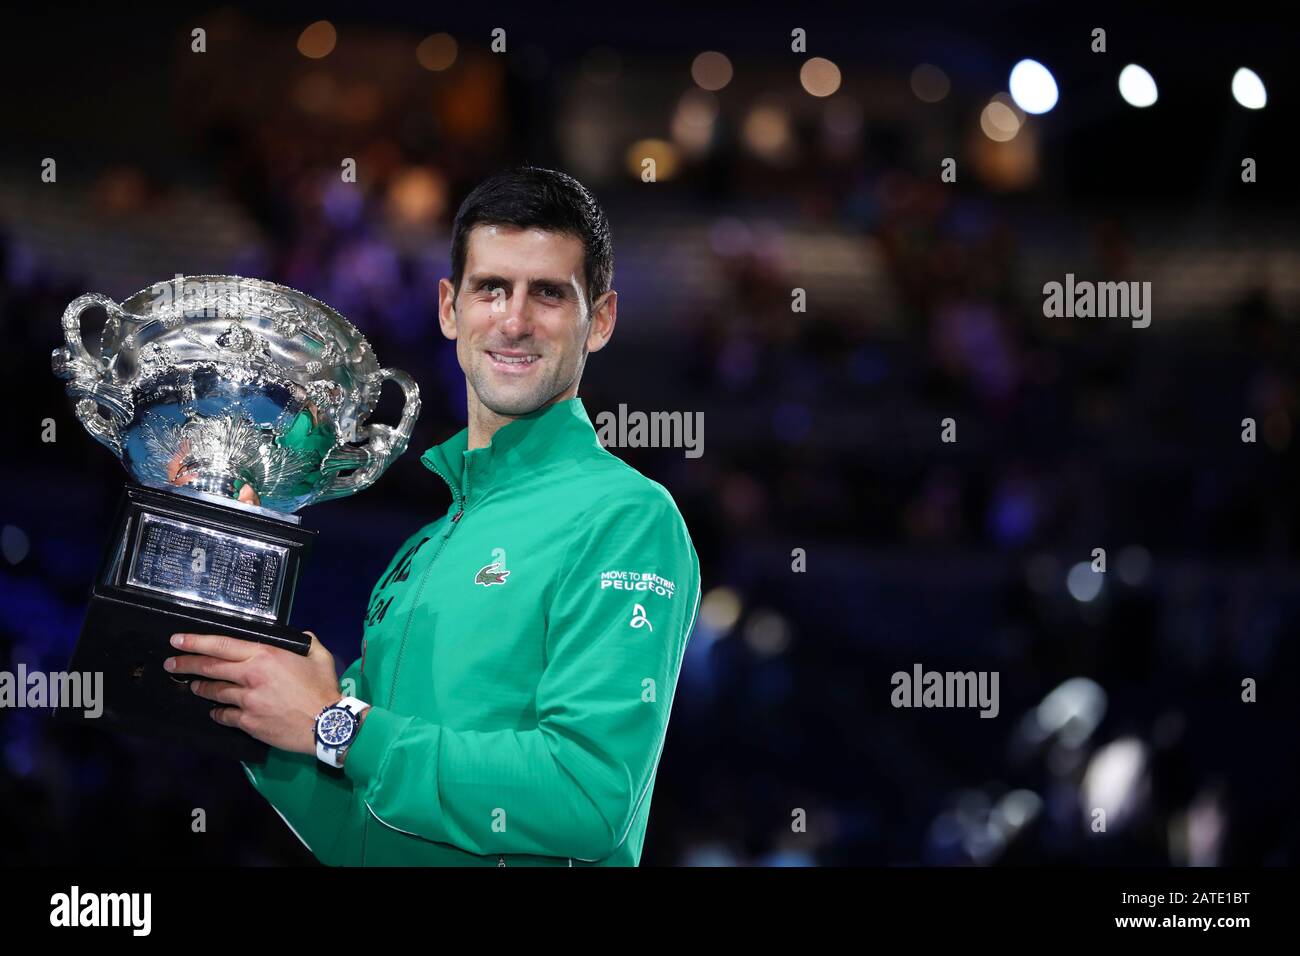 Det er billigt fjerkræ disk Melbourne, Australia. 2nd Feb, 2020. Novak Djokovic of Serbia poses with  the trophy during the awarding ceremony after the men's singles final  against Dominic Thiem of Austria at 2020 Australian Open in